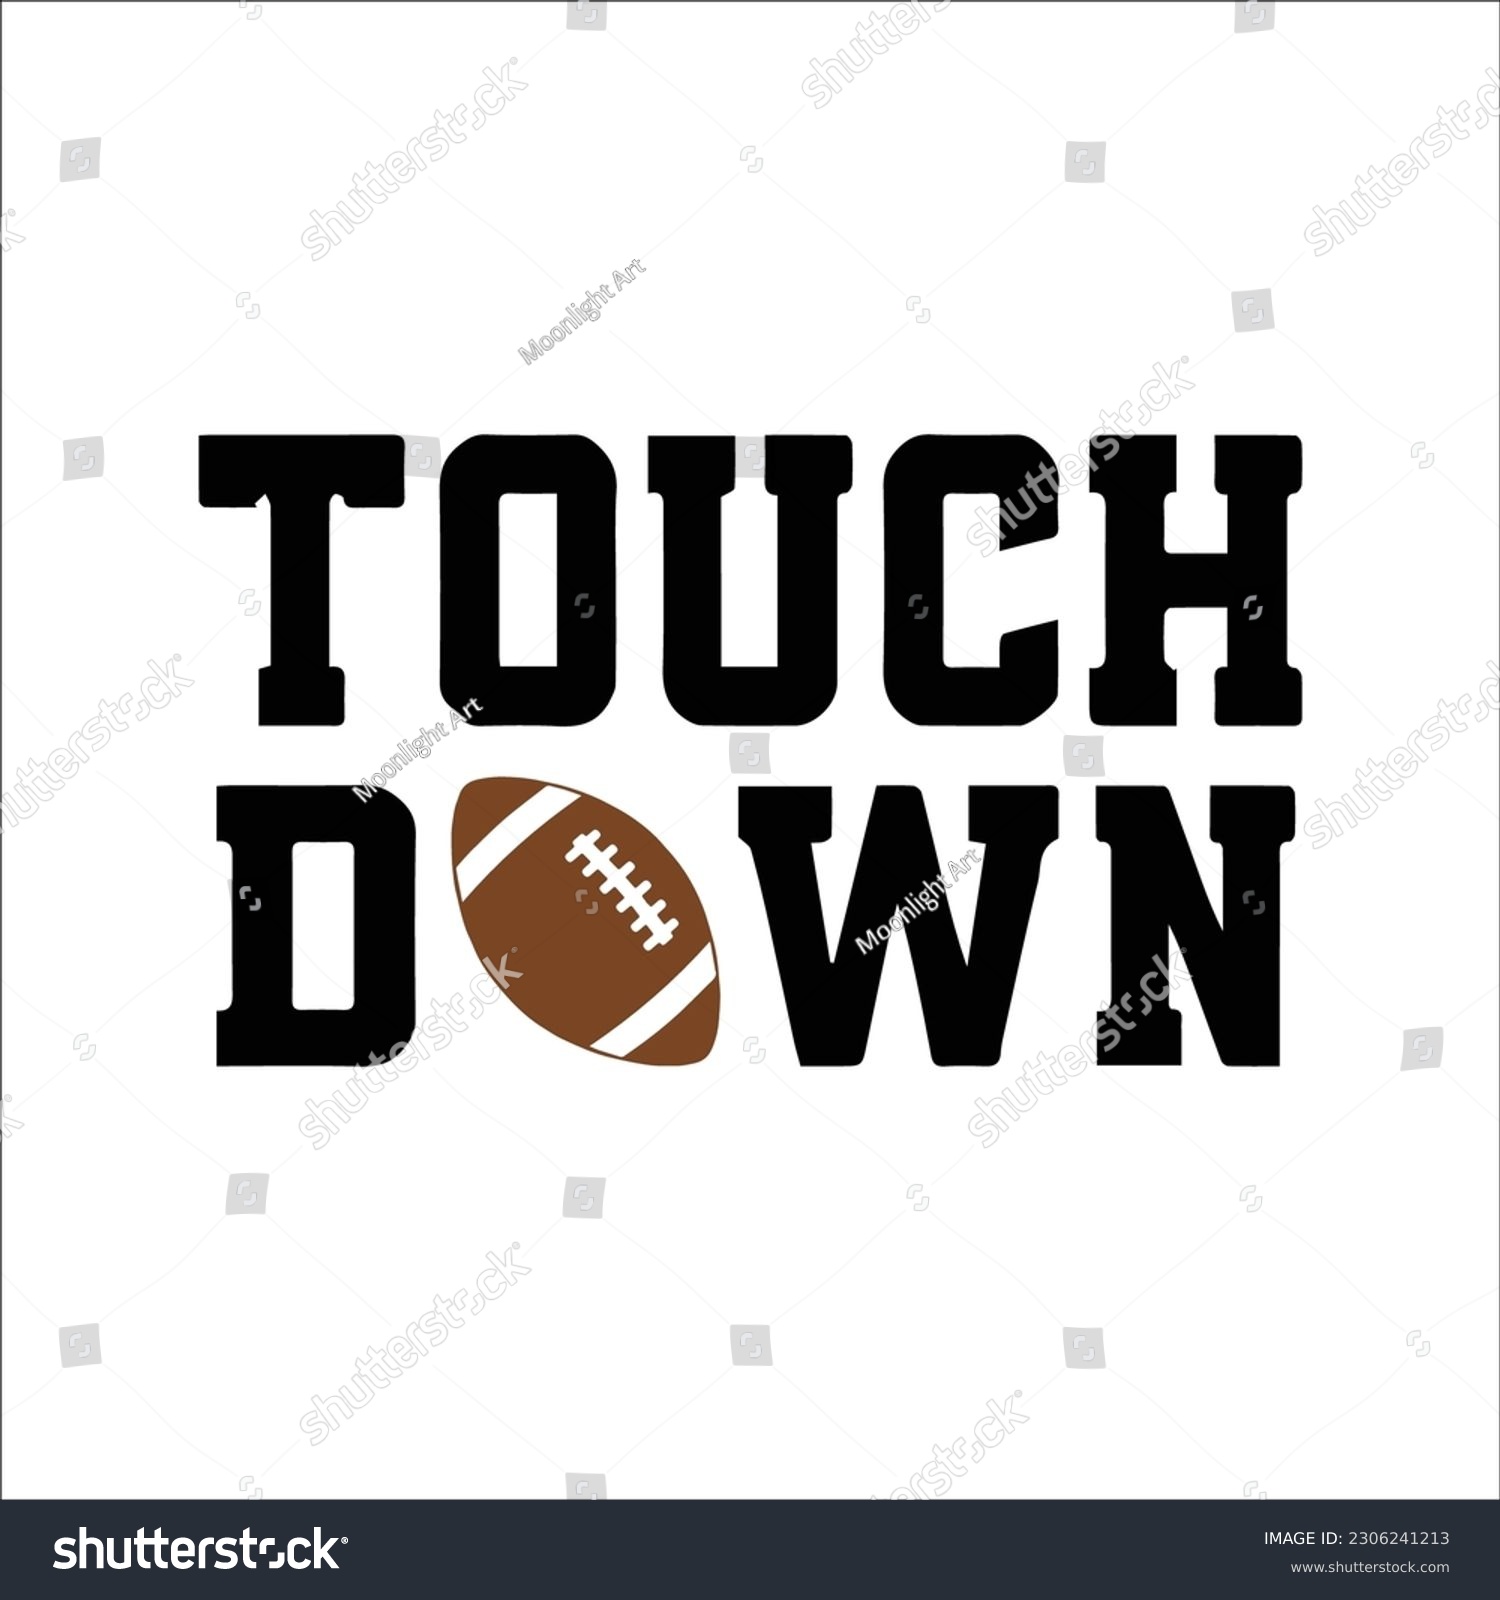 SVG of American football svg, Football svg, game day, touchdown, football ball game svg, football quotes, shirt idea svg